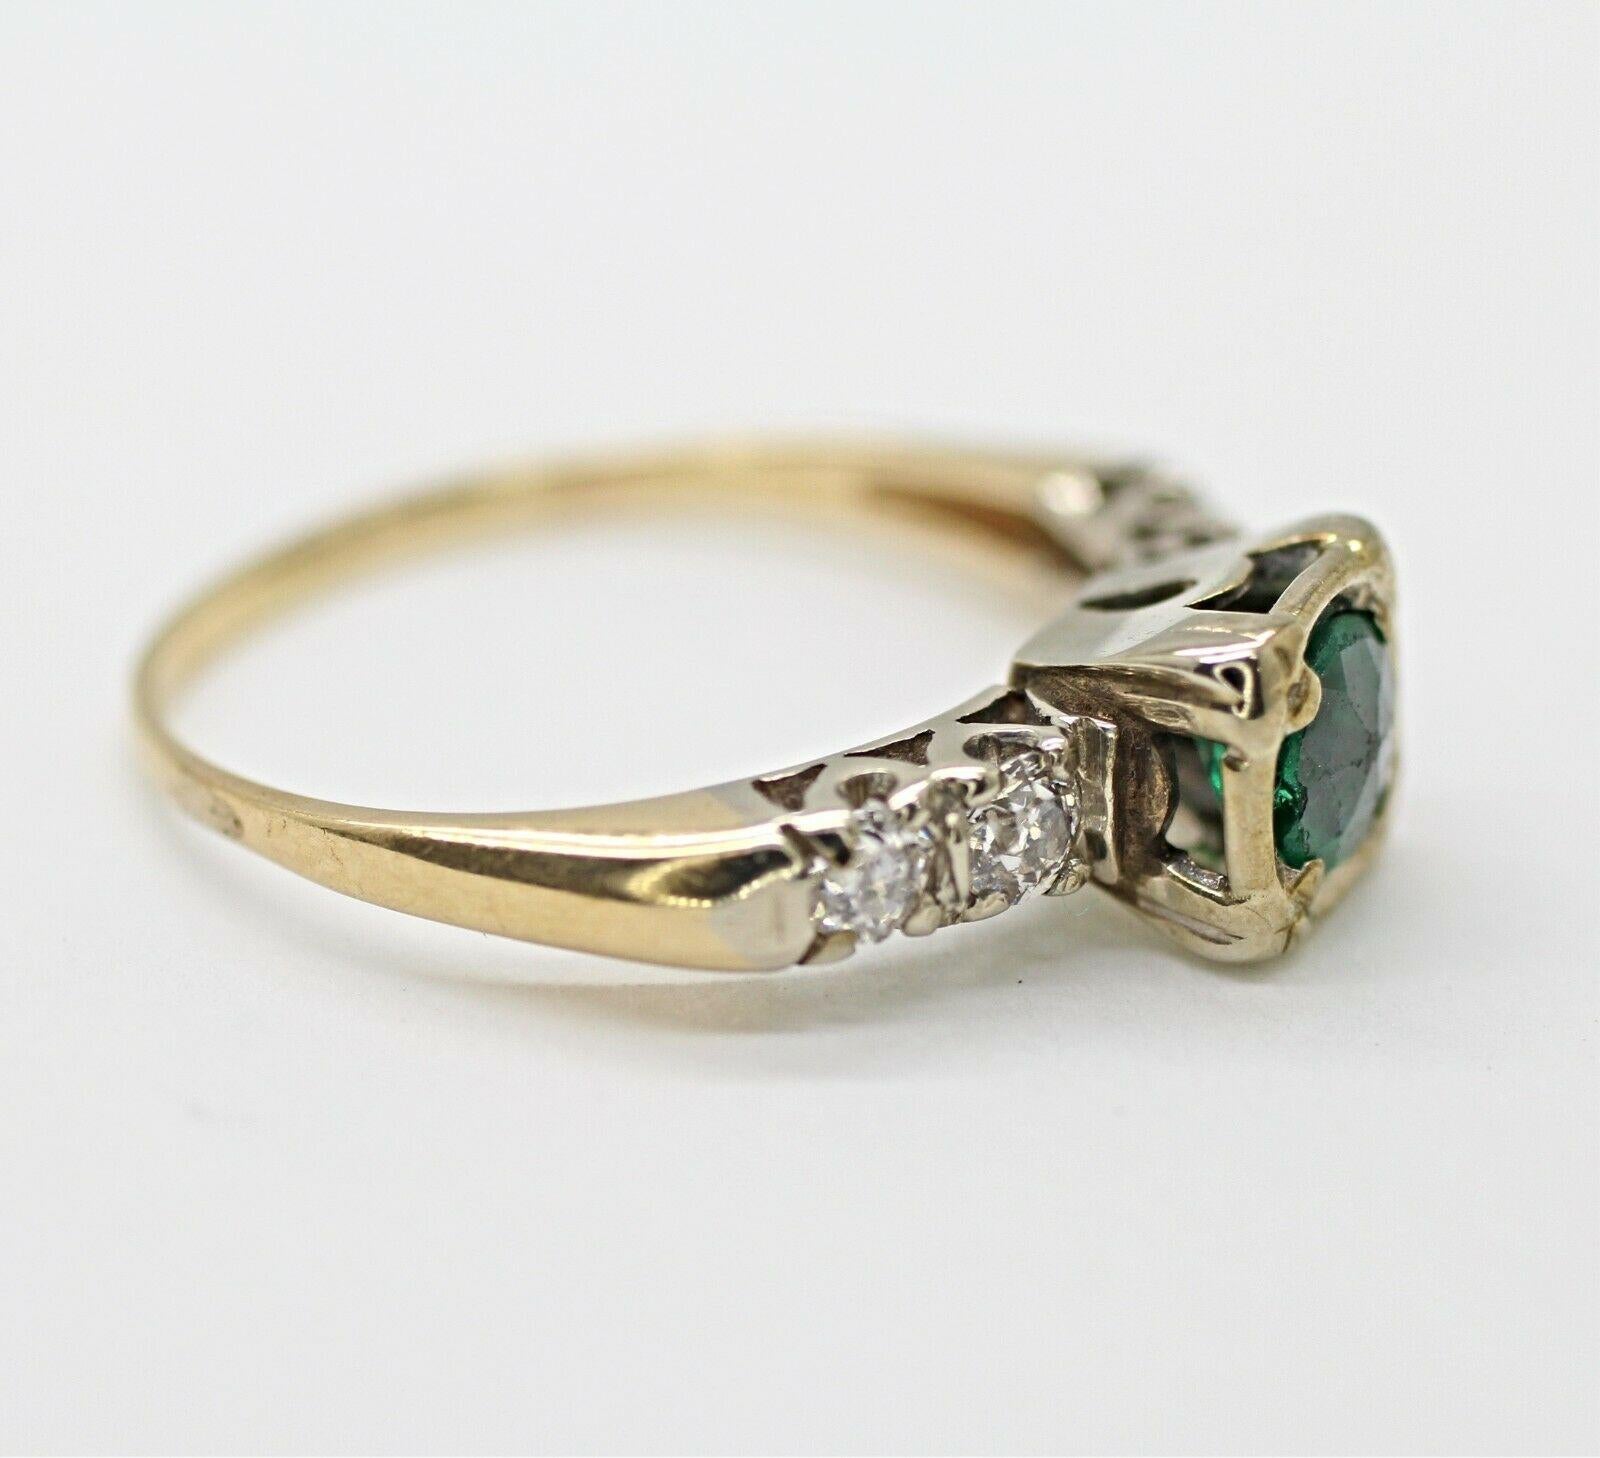 Contemporary 14 Karat Yellow Gold Emerald and Diamond Ring Containing